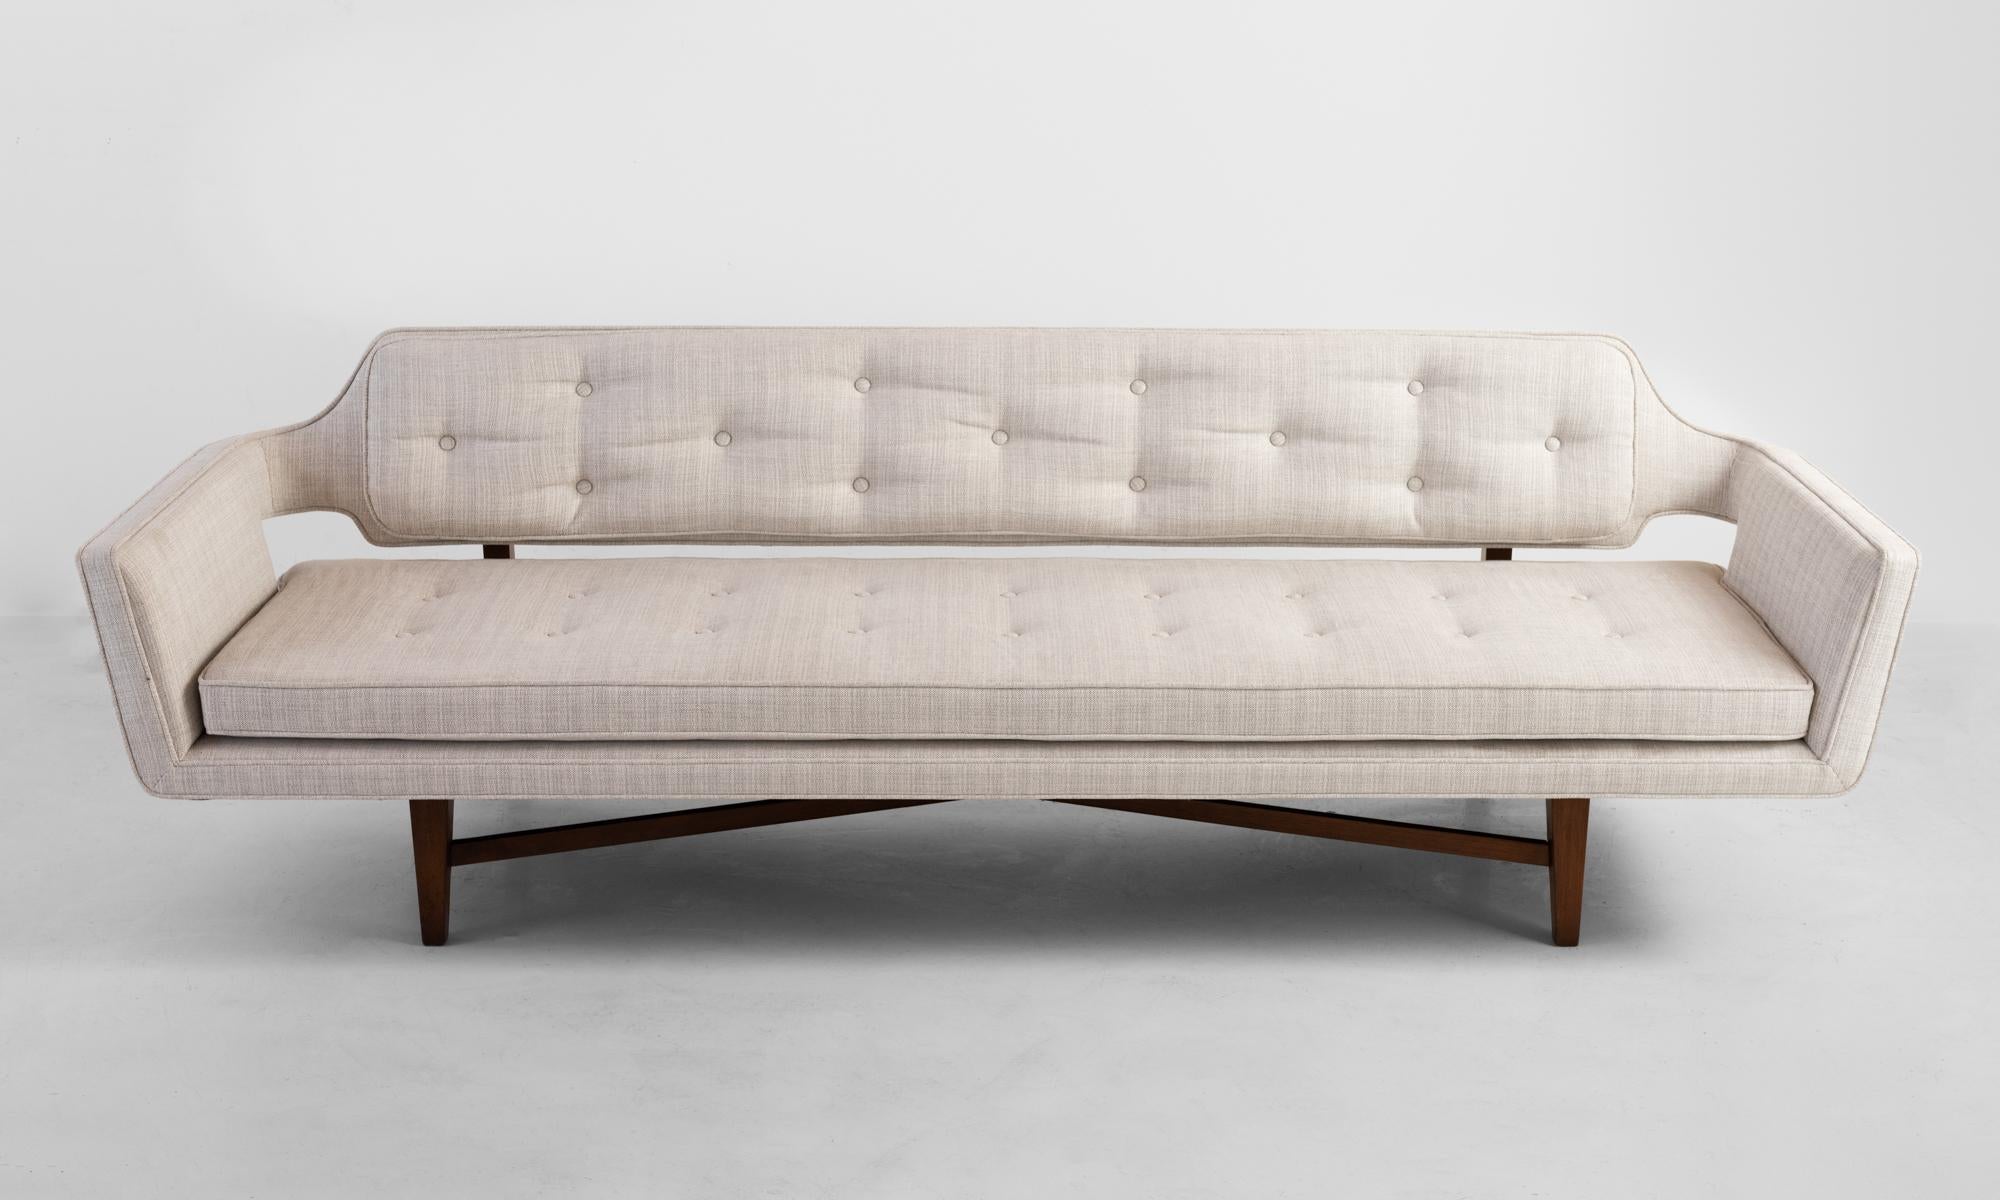 Model 6133 sofa by Edward Wormley, America, circa 1960.

Original upholstery with subtle tonal striping on cross bar wooden base.